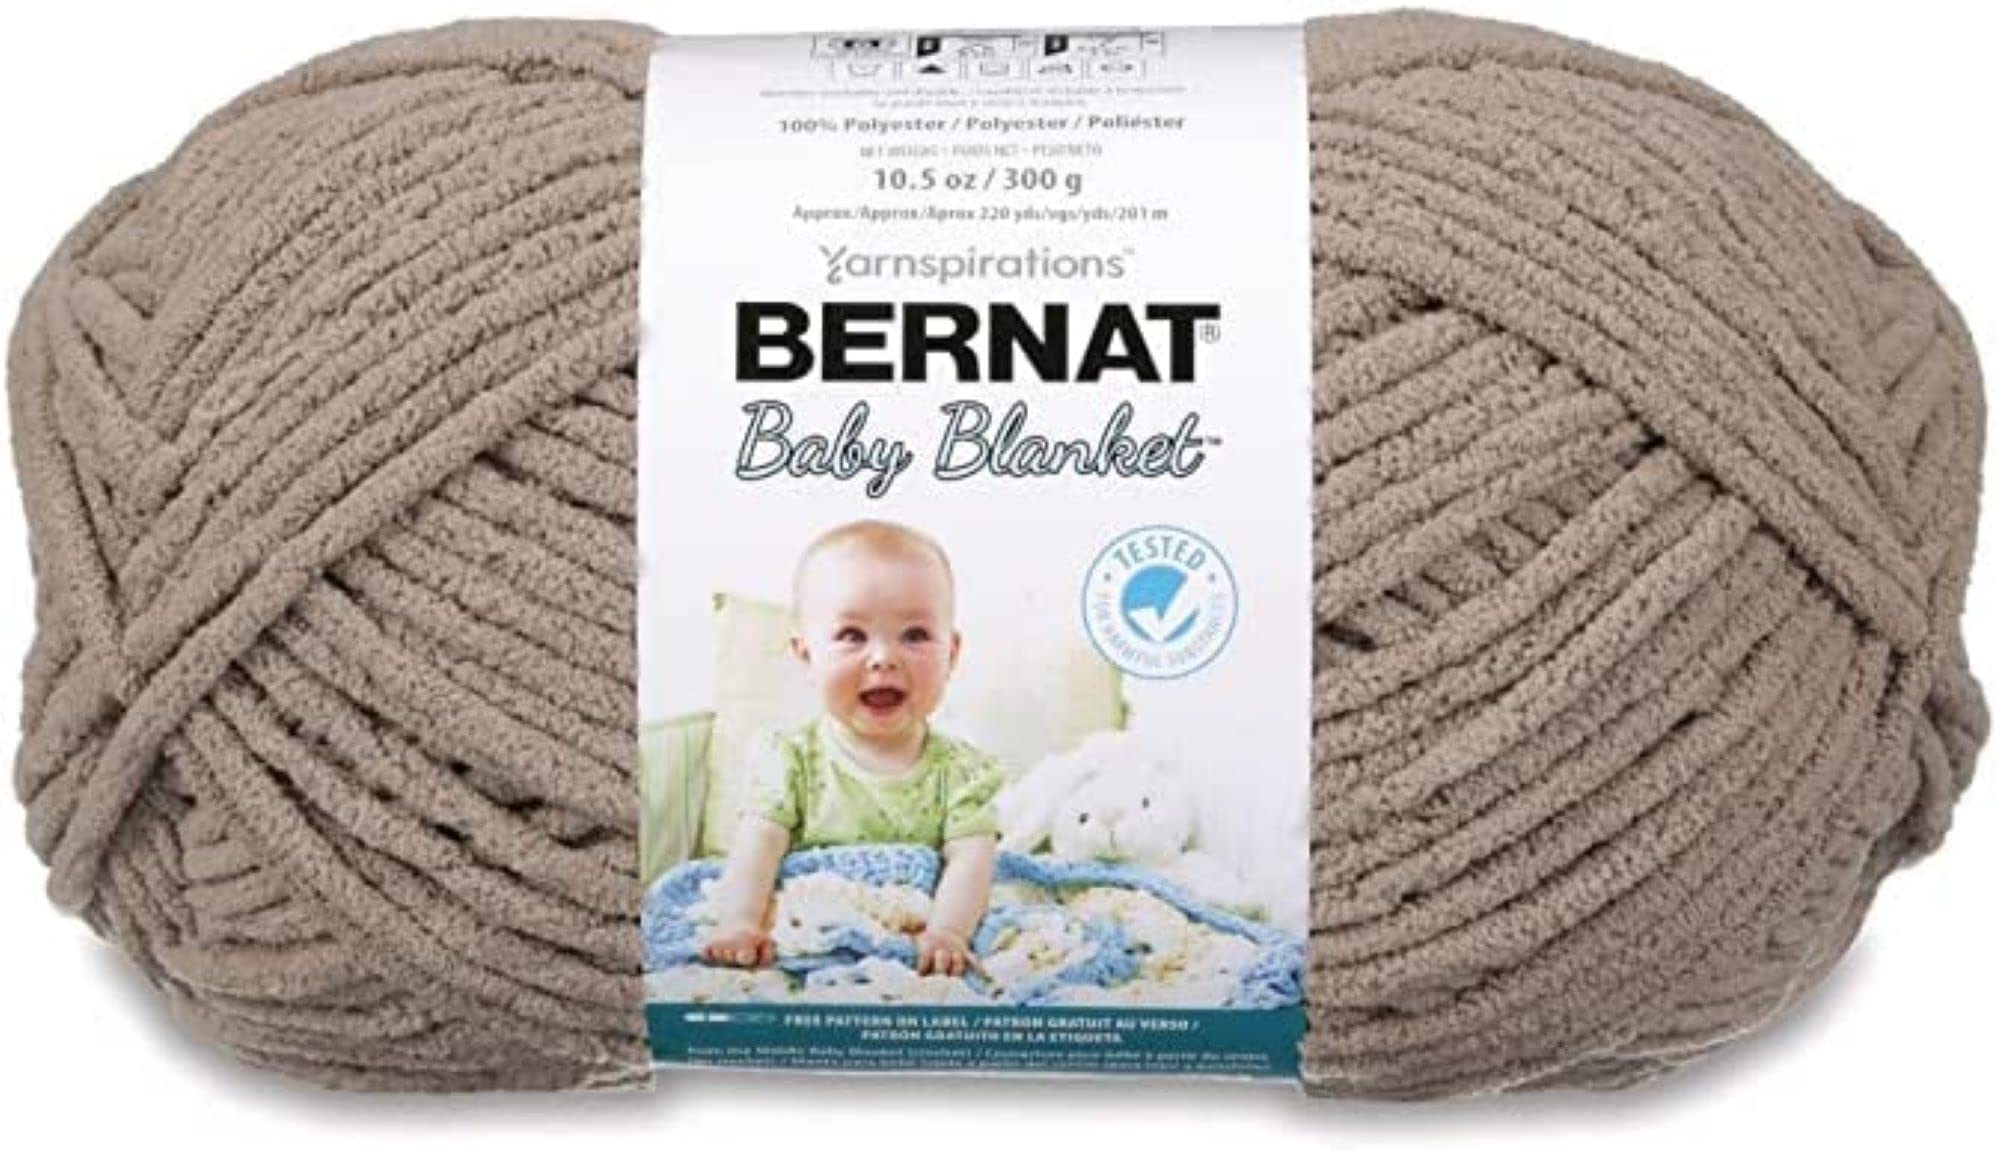 Bernat Blanket Twist Yarn (300g/10.5oz)